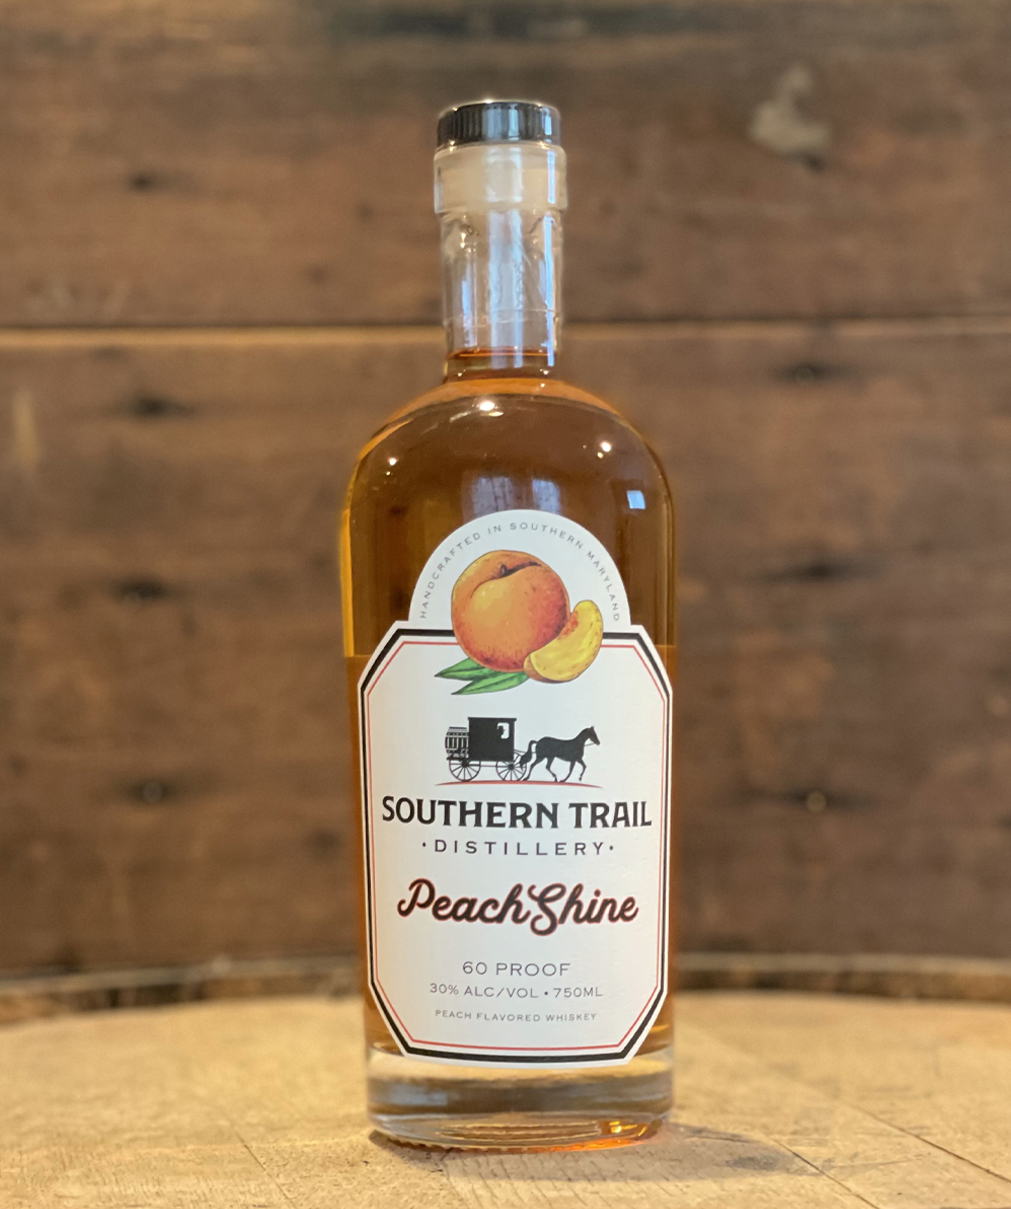 Peach Shine Southern Trail Distillery